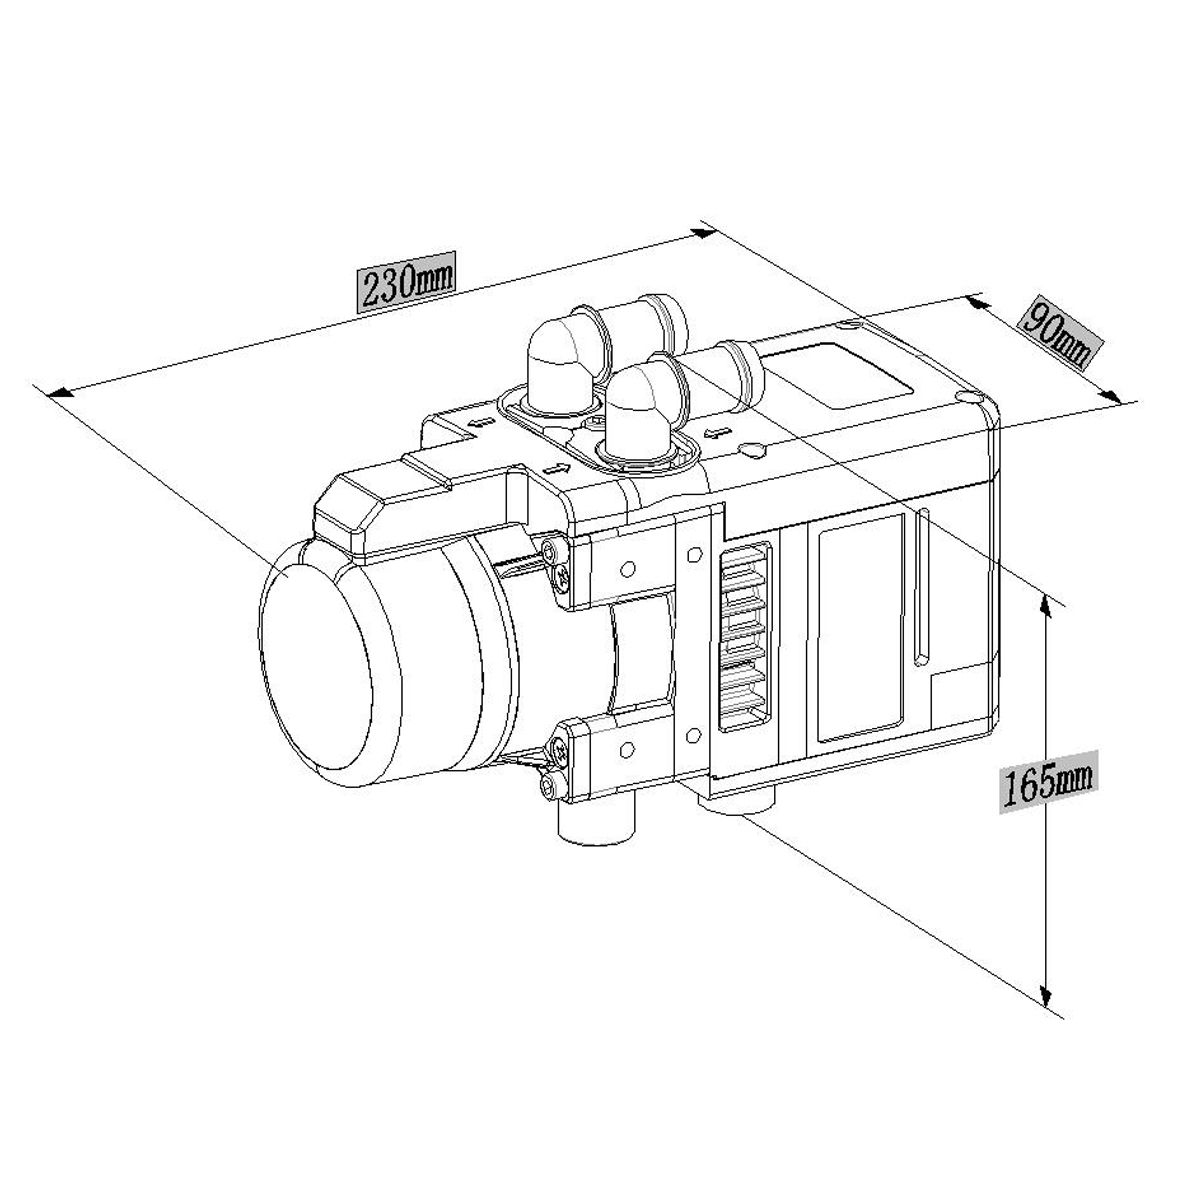 12V-8KW-Plumbing-Water-Heater-Kit-1614469